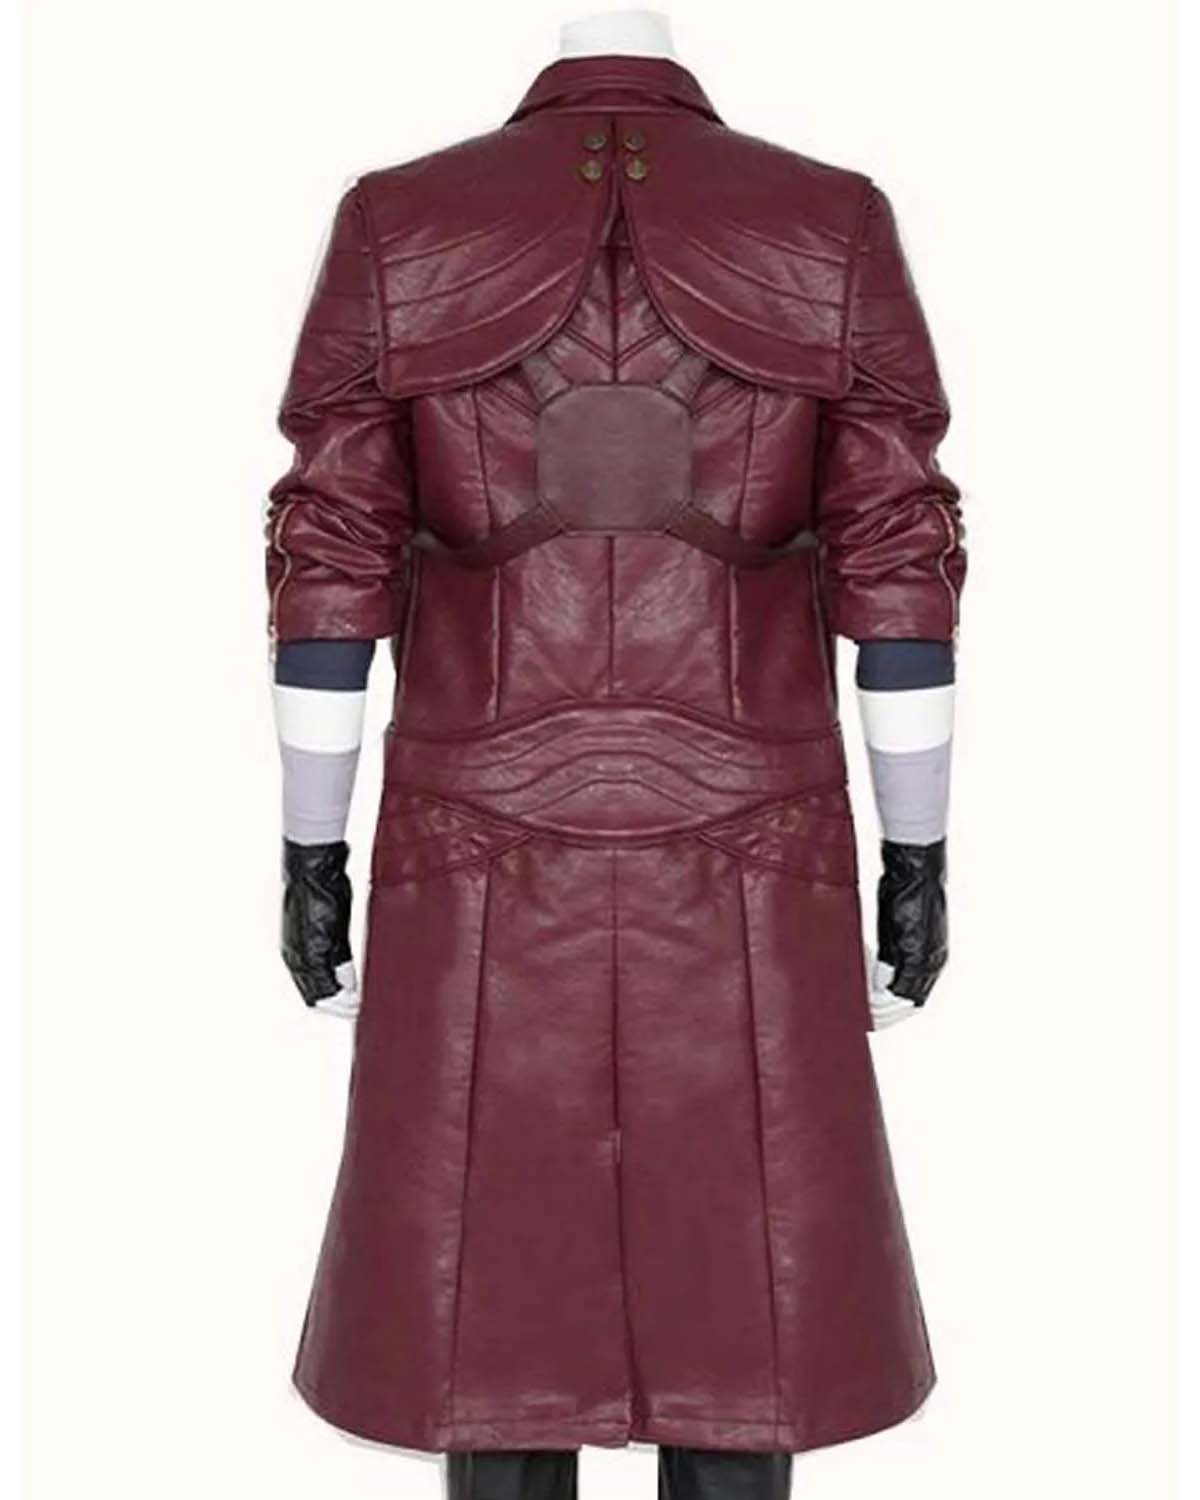 Elite Devil May Cry 5 Dante Leather Coat